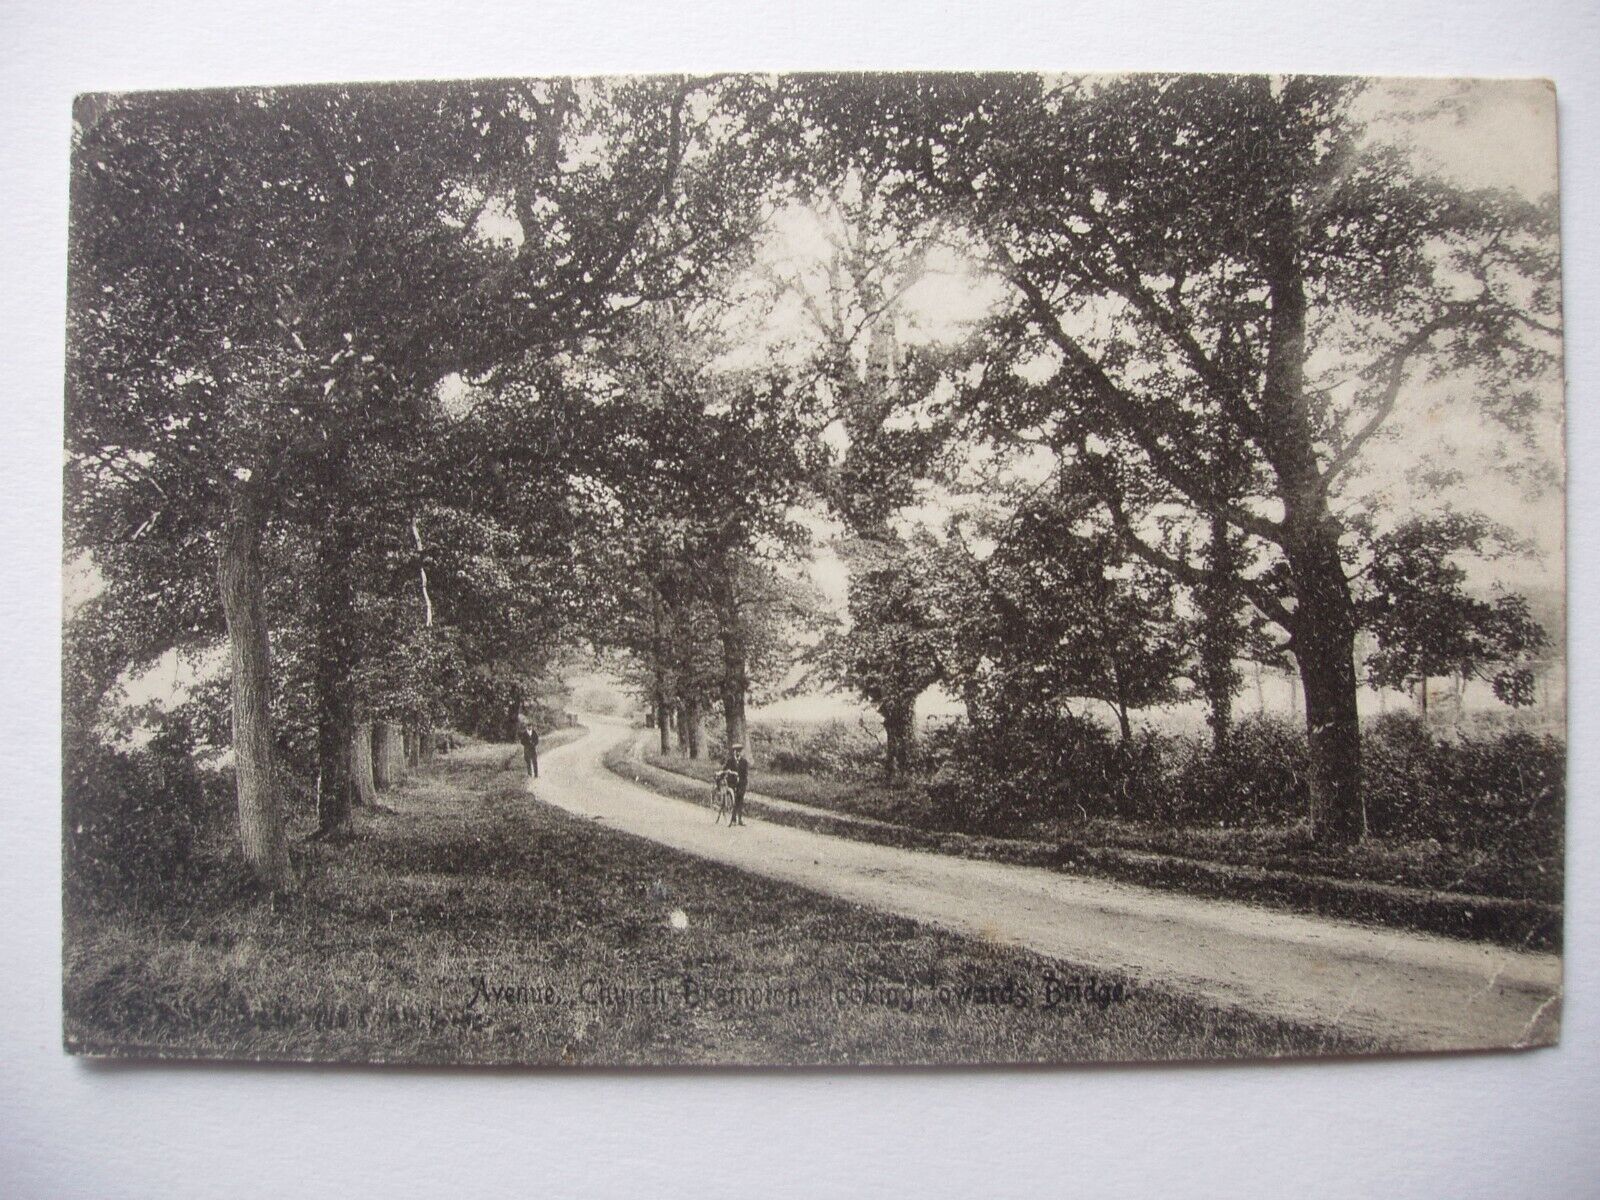 House Clearance - Avenue, Church Brampton looking towards Brdige - circa 1910 service